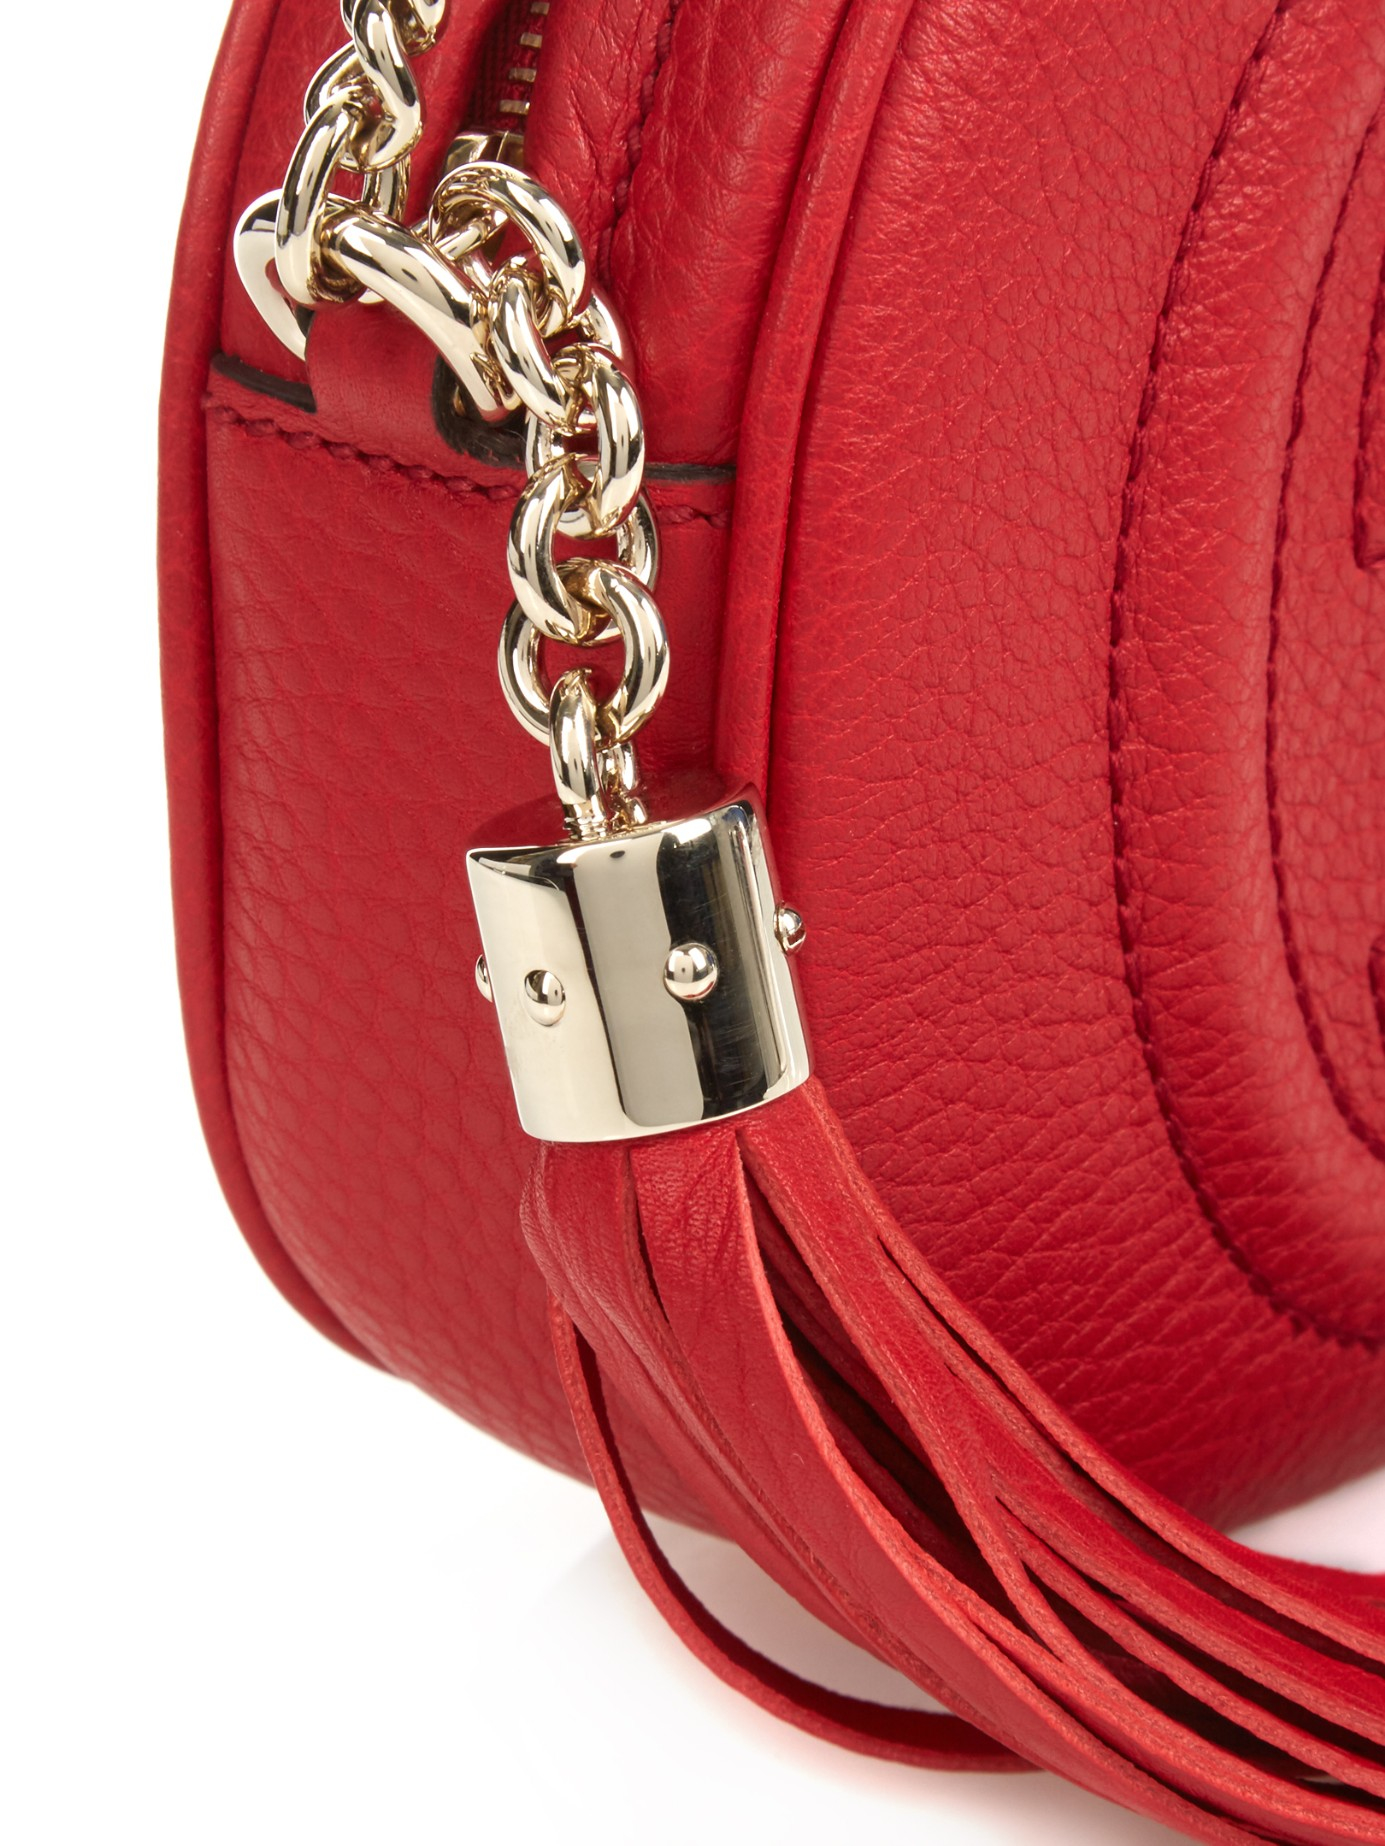 Lyst - Gucci Mini Soho Chain-Strap Cross-Body Bag in Red